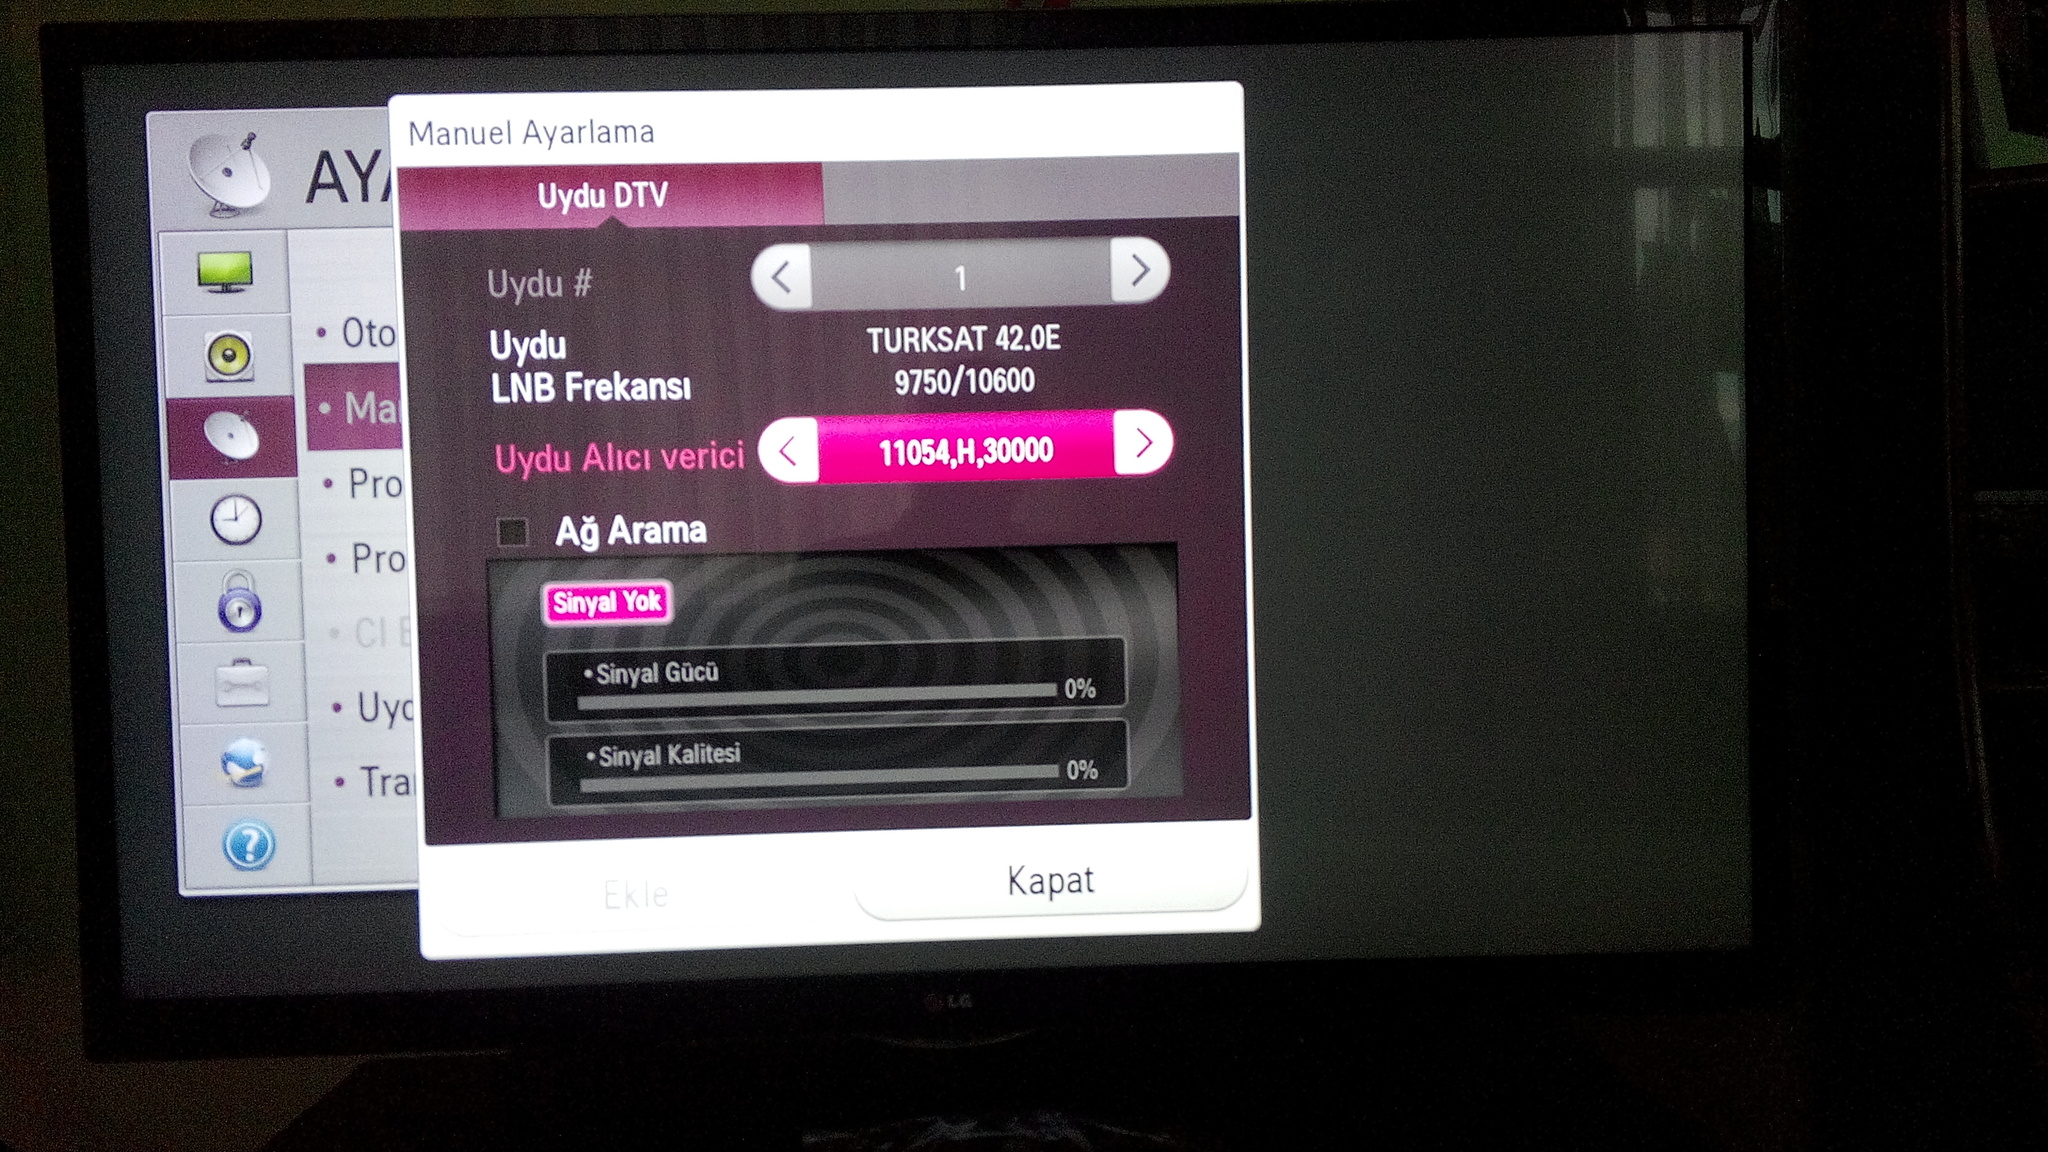 Apk на телевизор lg. Источник сигнала на телевизоре LG. Телевизор LG 2012. LG телевизор Smart TV выбор источника. LG телевизор смарт ТВ классика.